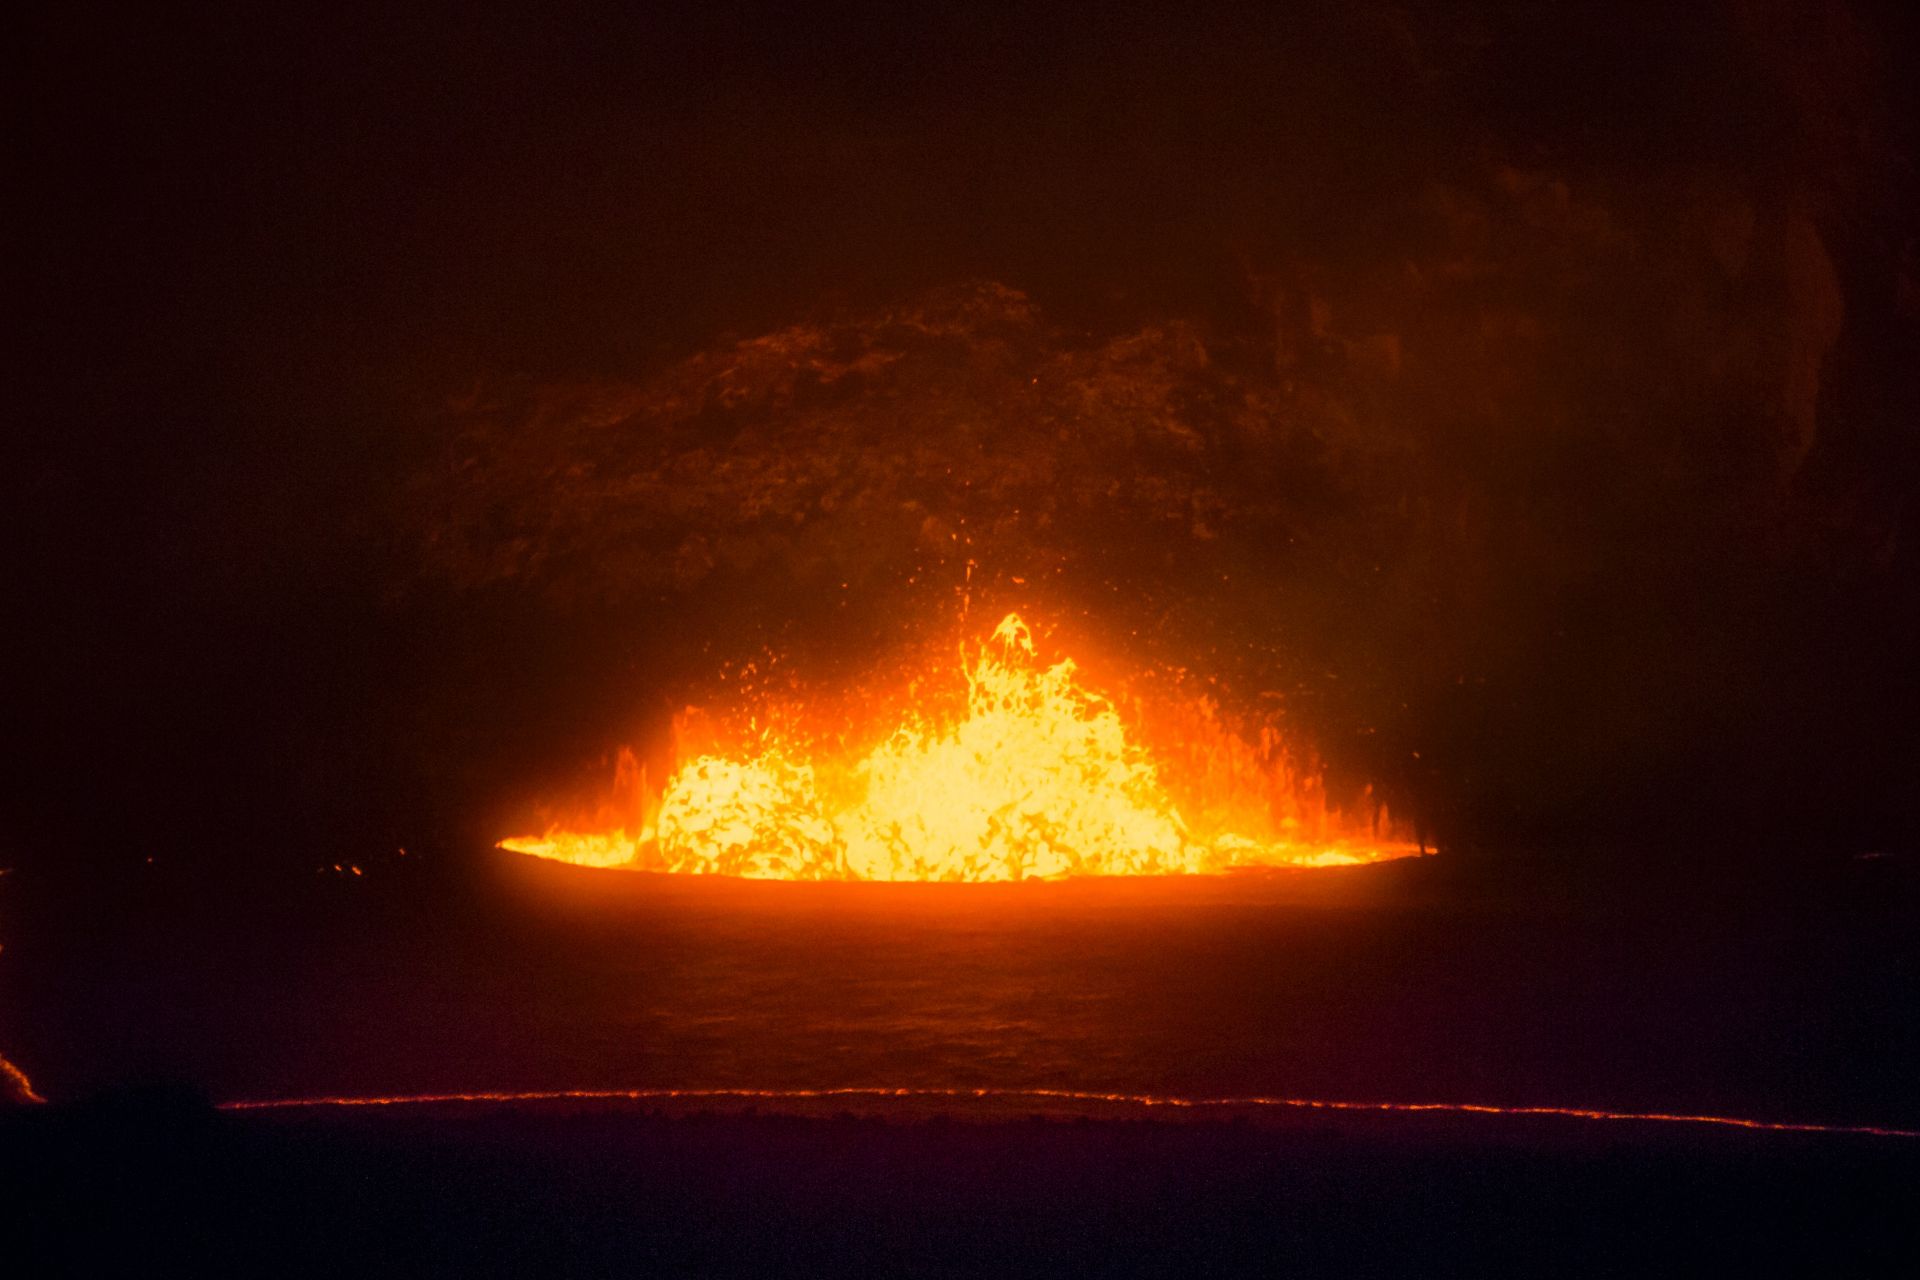 dark noise album recorded inside a volcano